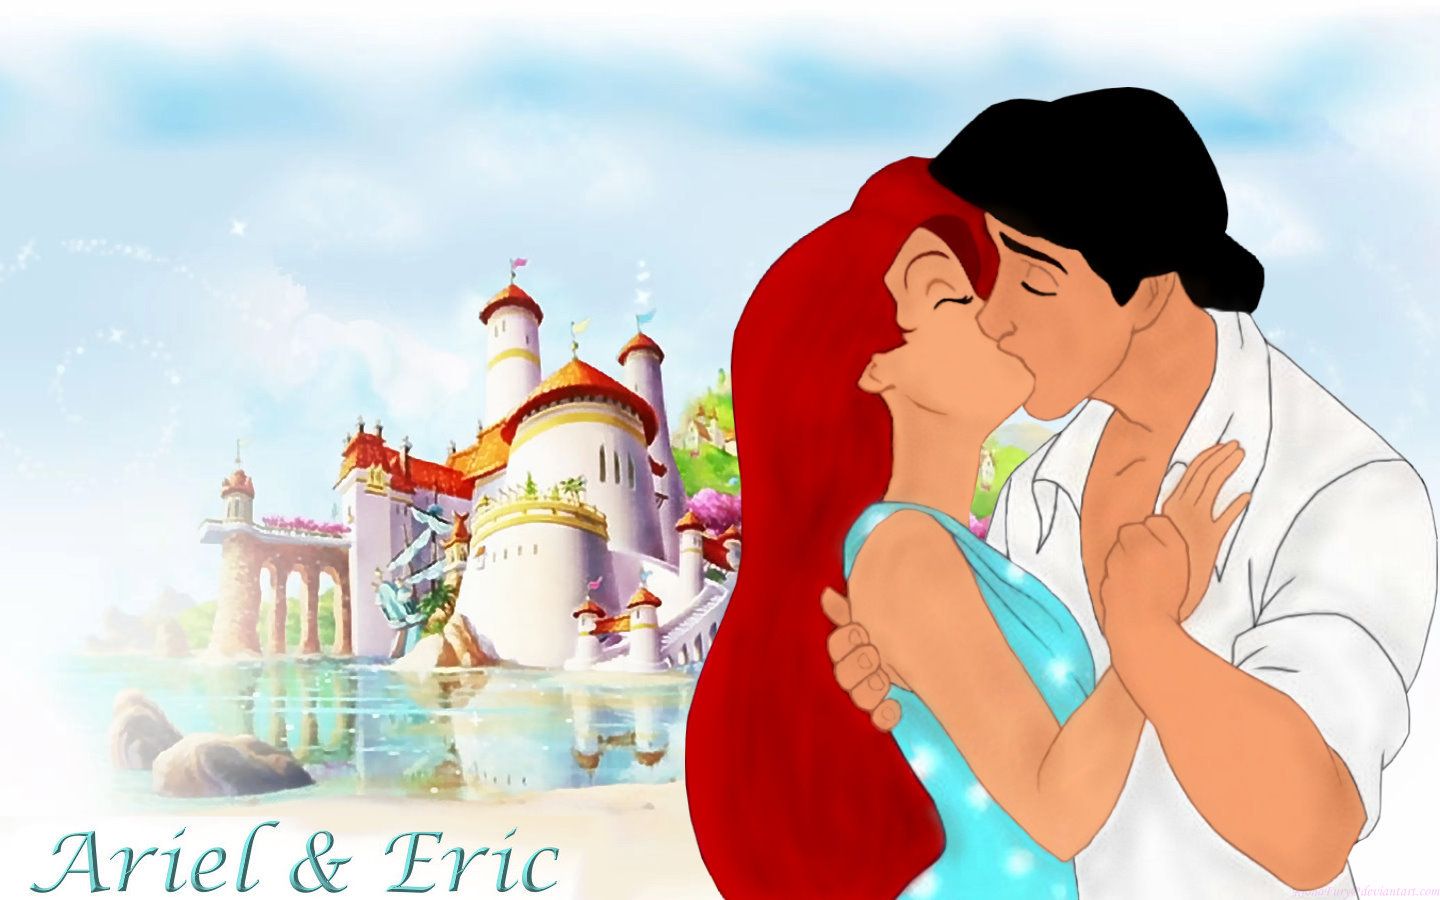 1440x900 Ariel & Eric - Disney Princess Valentine's Day Wallpaper ...